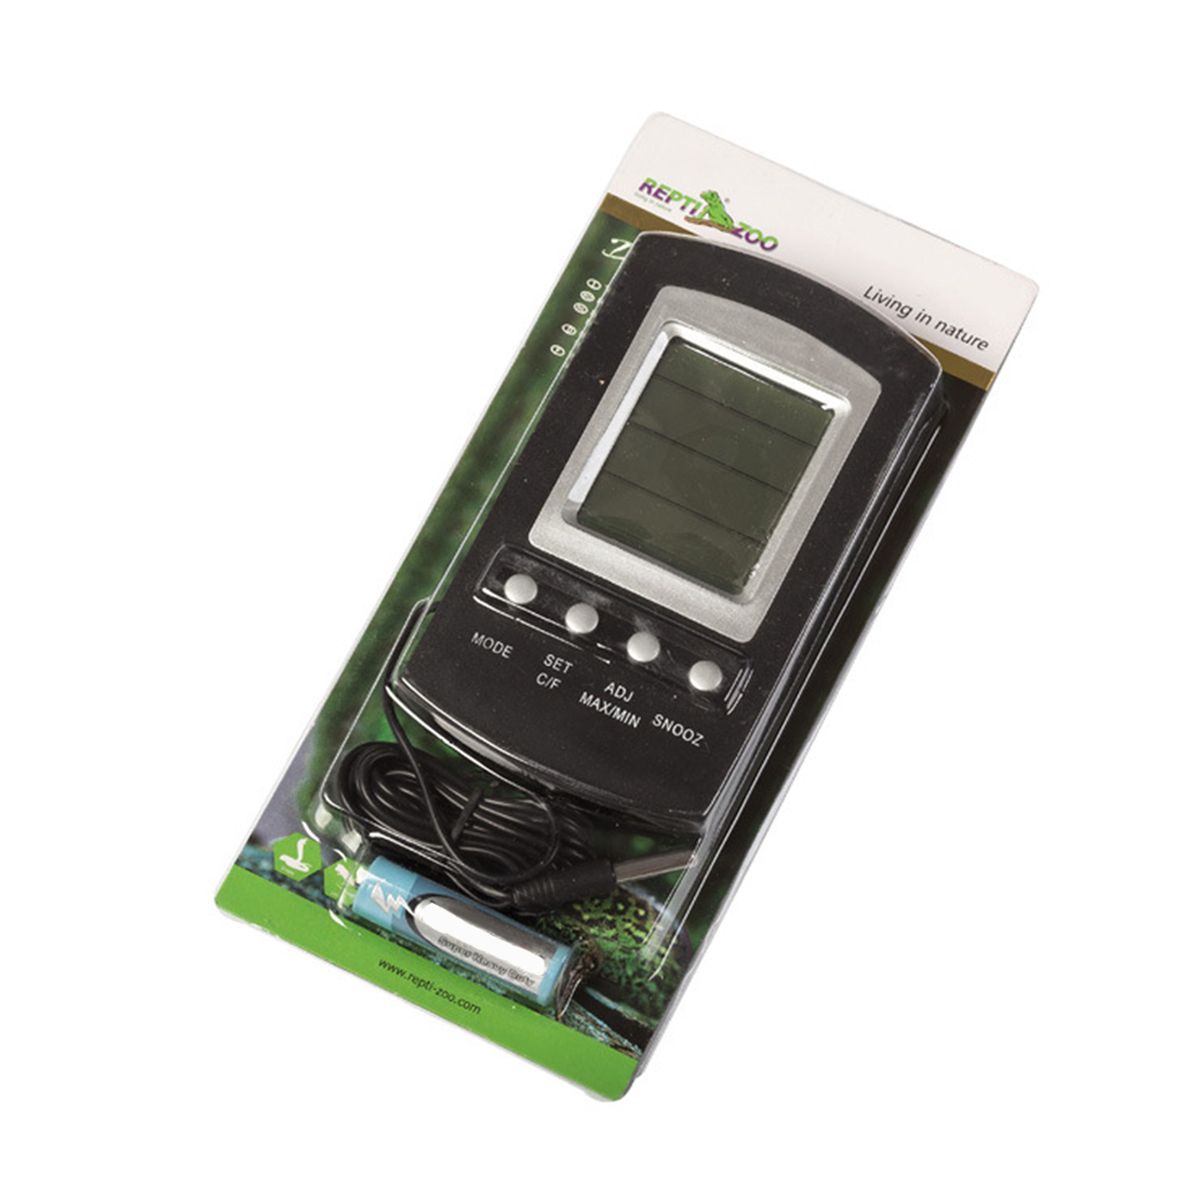 LCD-Digital-MaxMin-Thermometer-Hygrometer-Alarm-Temperature-Humidity-Tester-Reptile-1274327